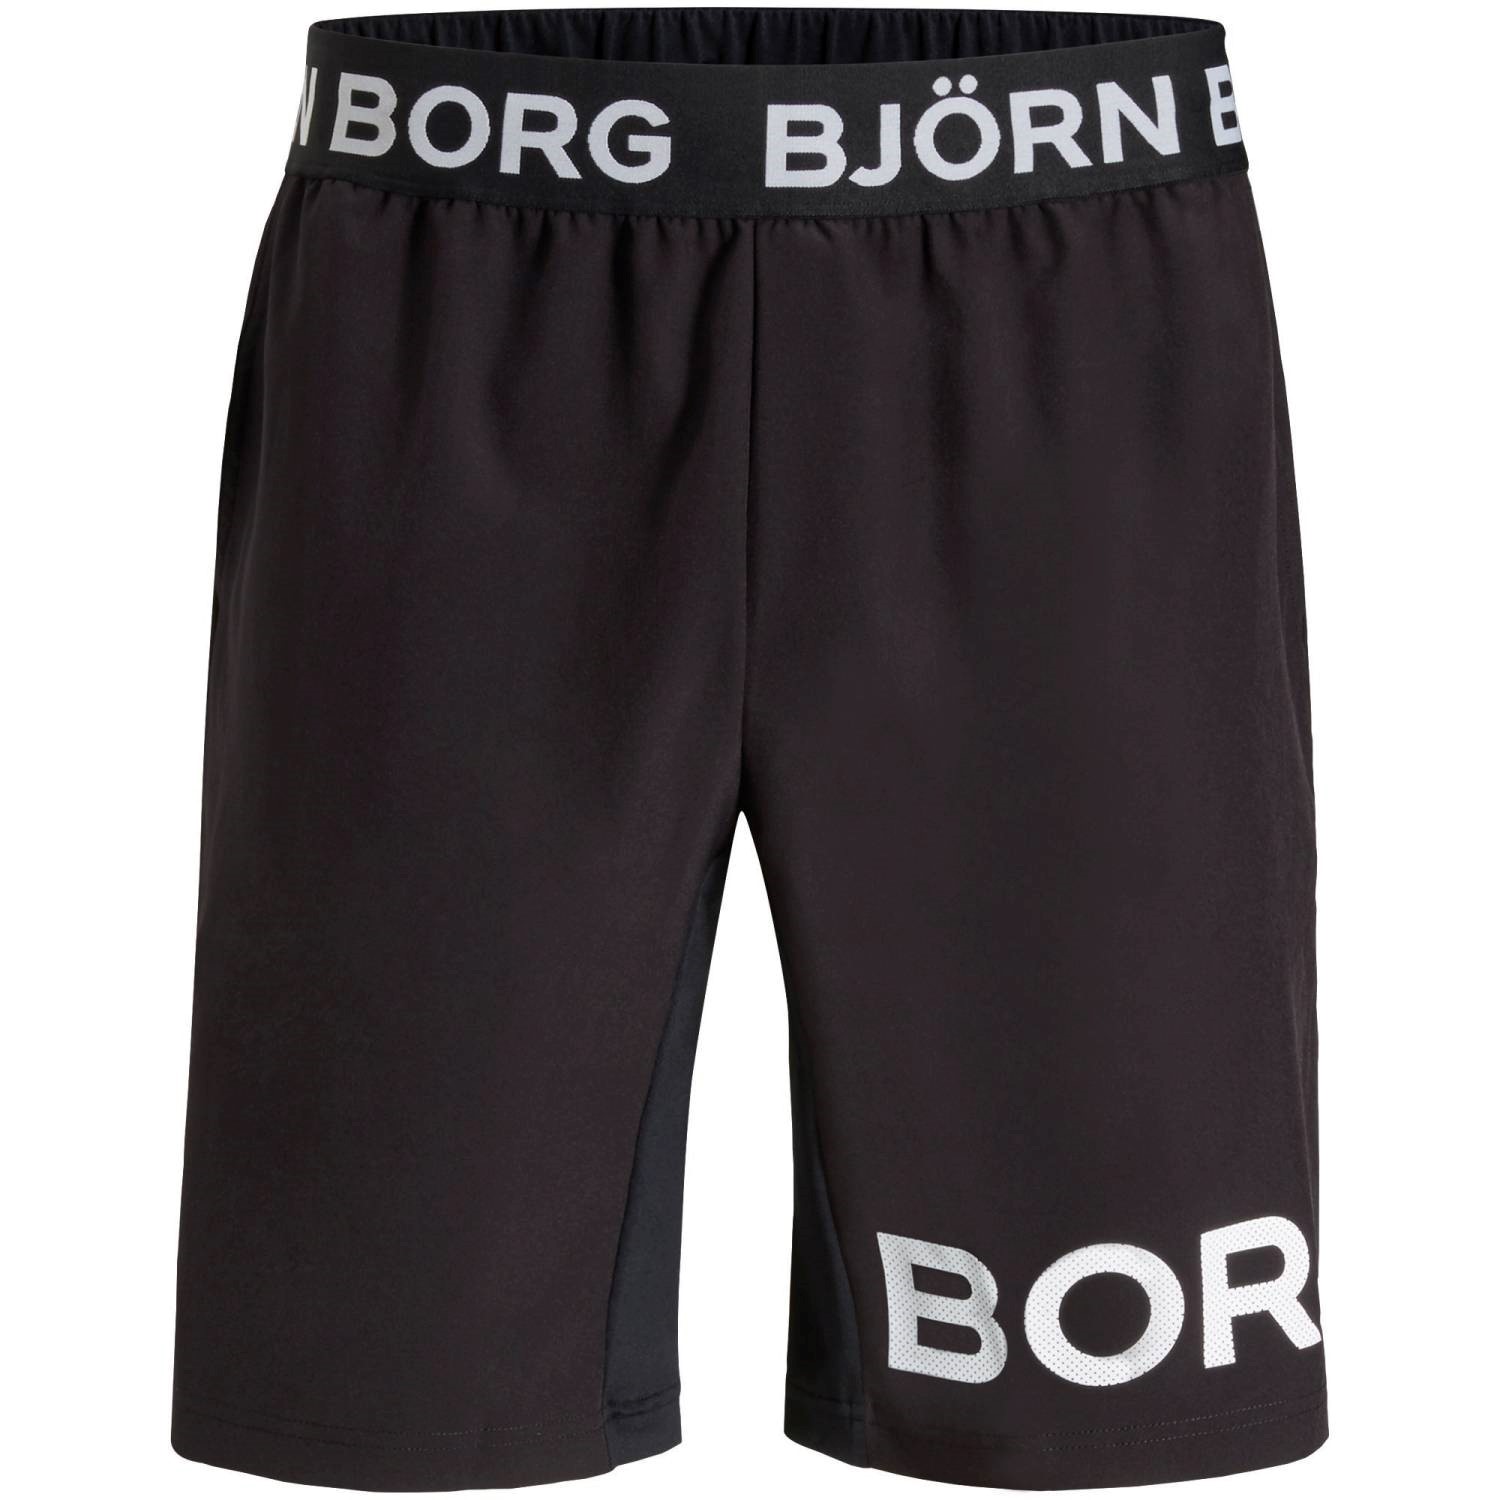 Björn Borg Performance August Shorts